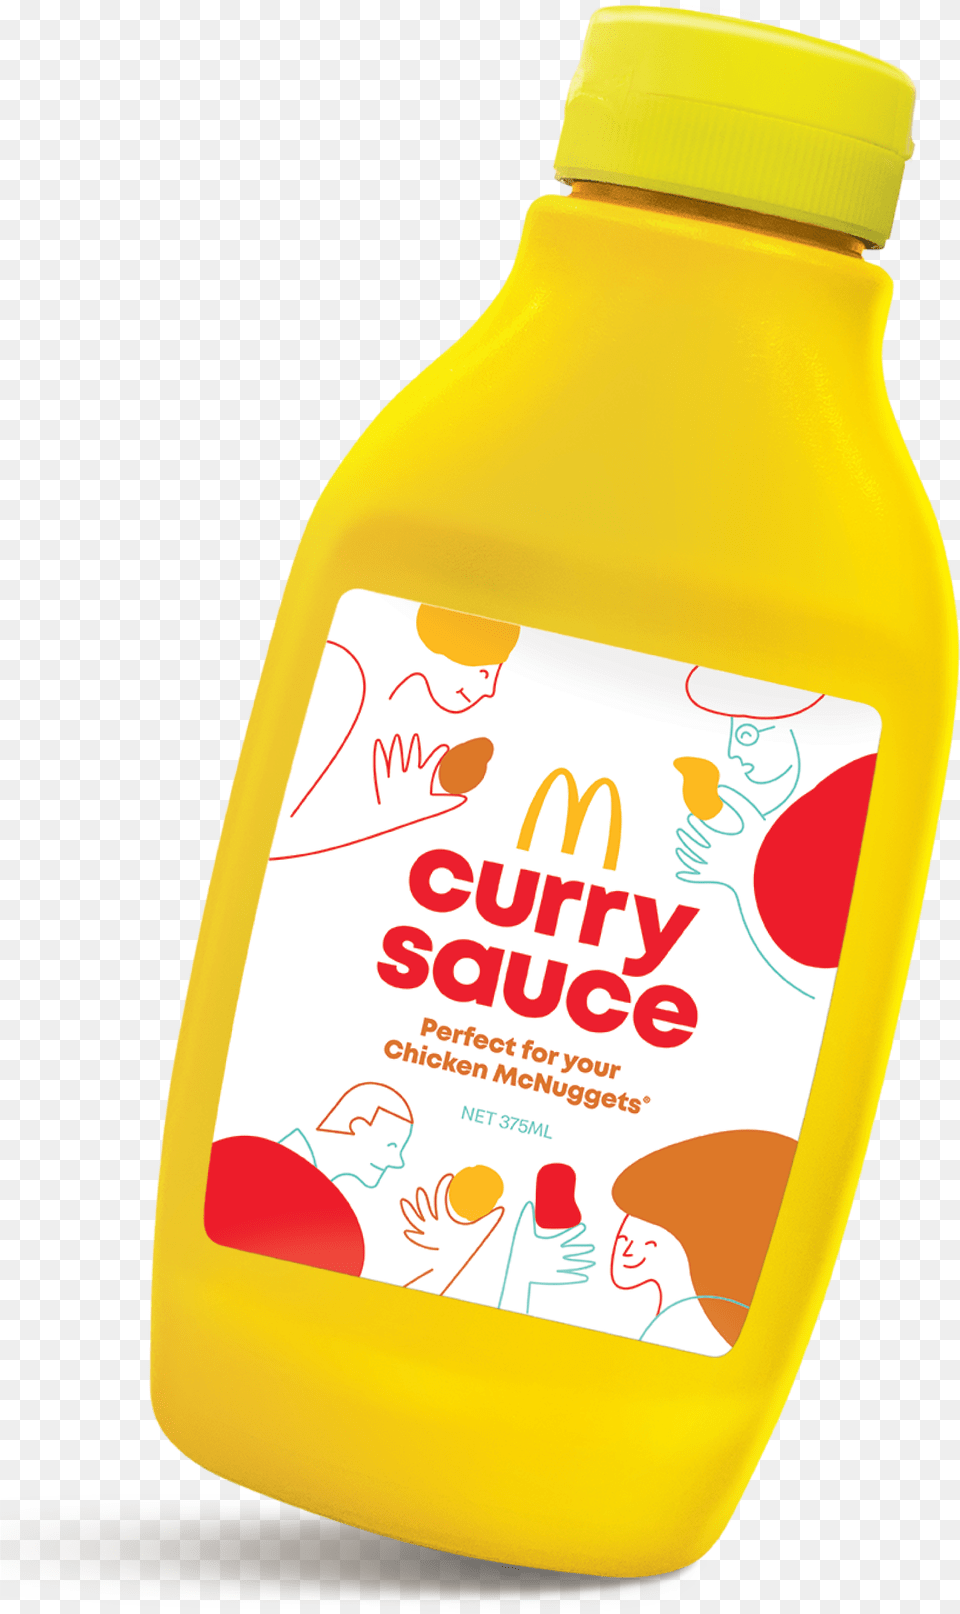 Mcdonald S Curry Sauce Bottle Data Spicy Nuggets Curry Sauce Bottle Singapore, Beverage, Juice, Orange Juice, Face Png Image